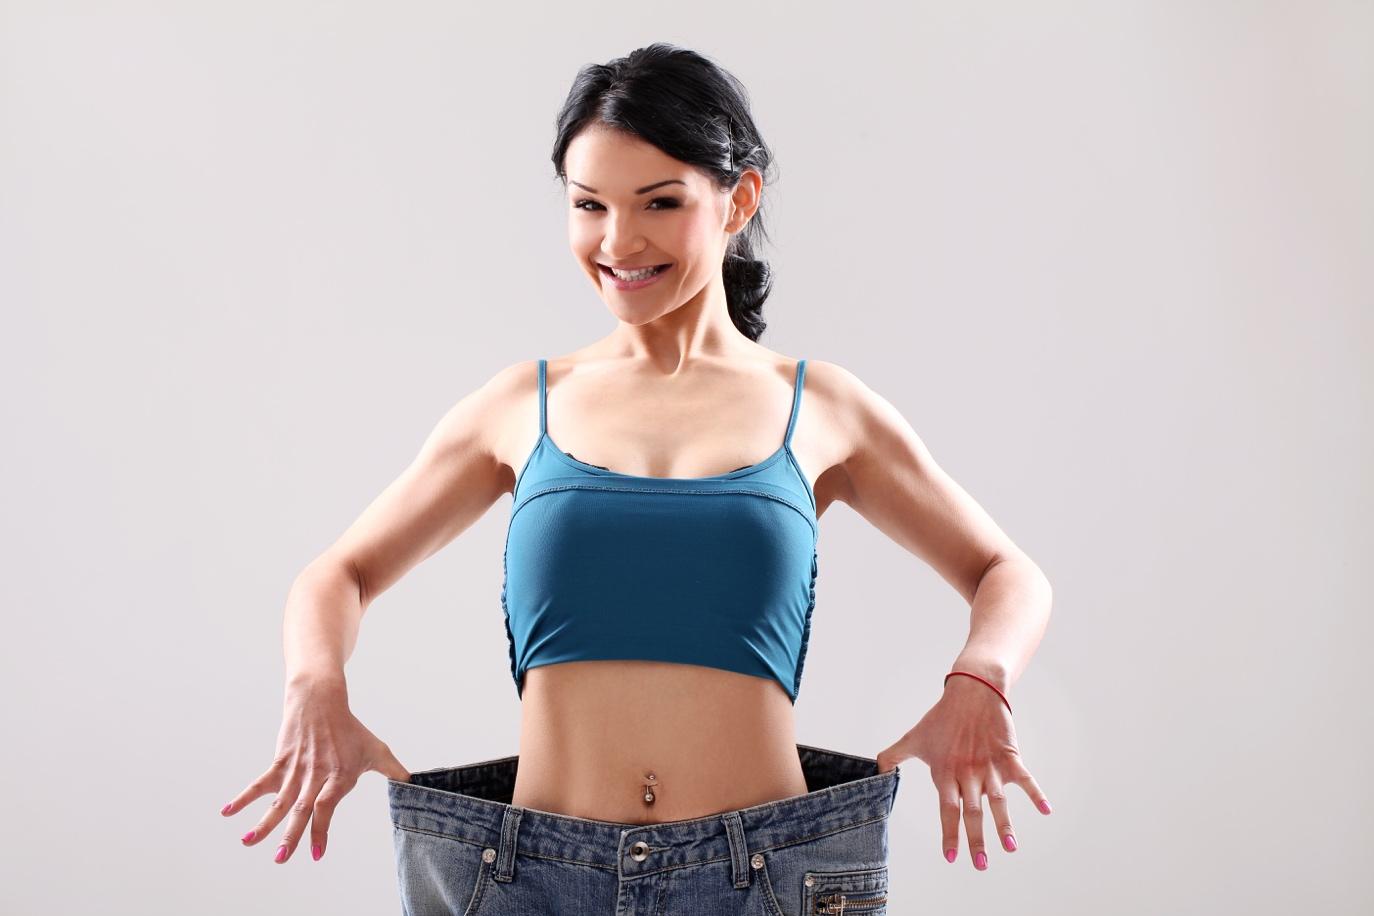 ../../Downloads/portrait-woman-showing-her-weight-loss.jpg